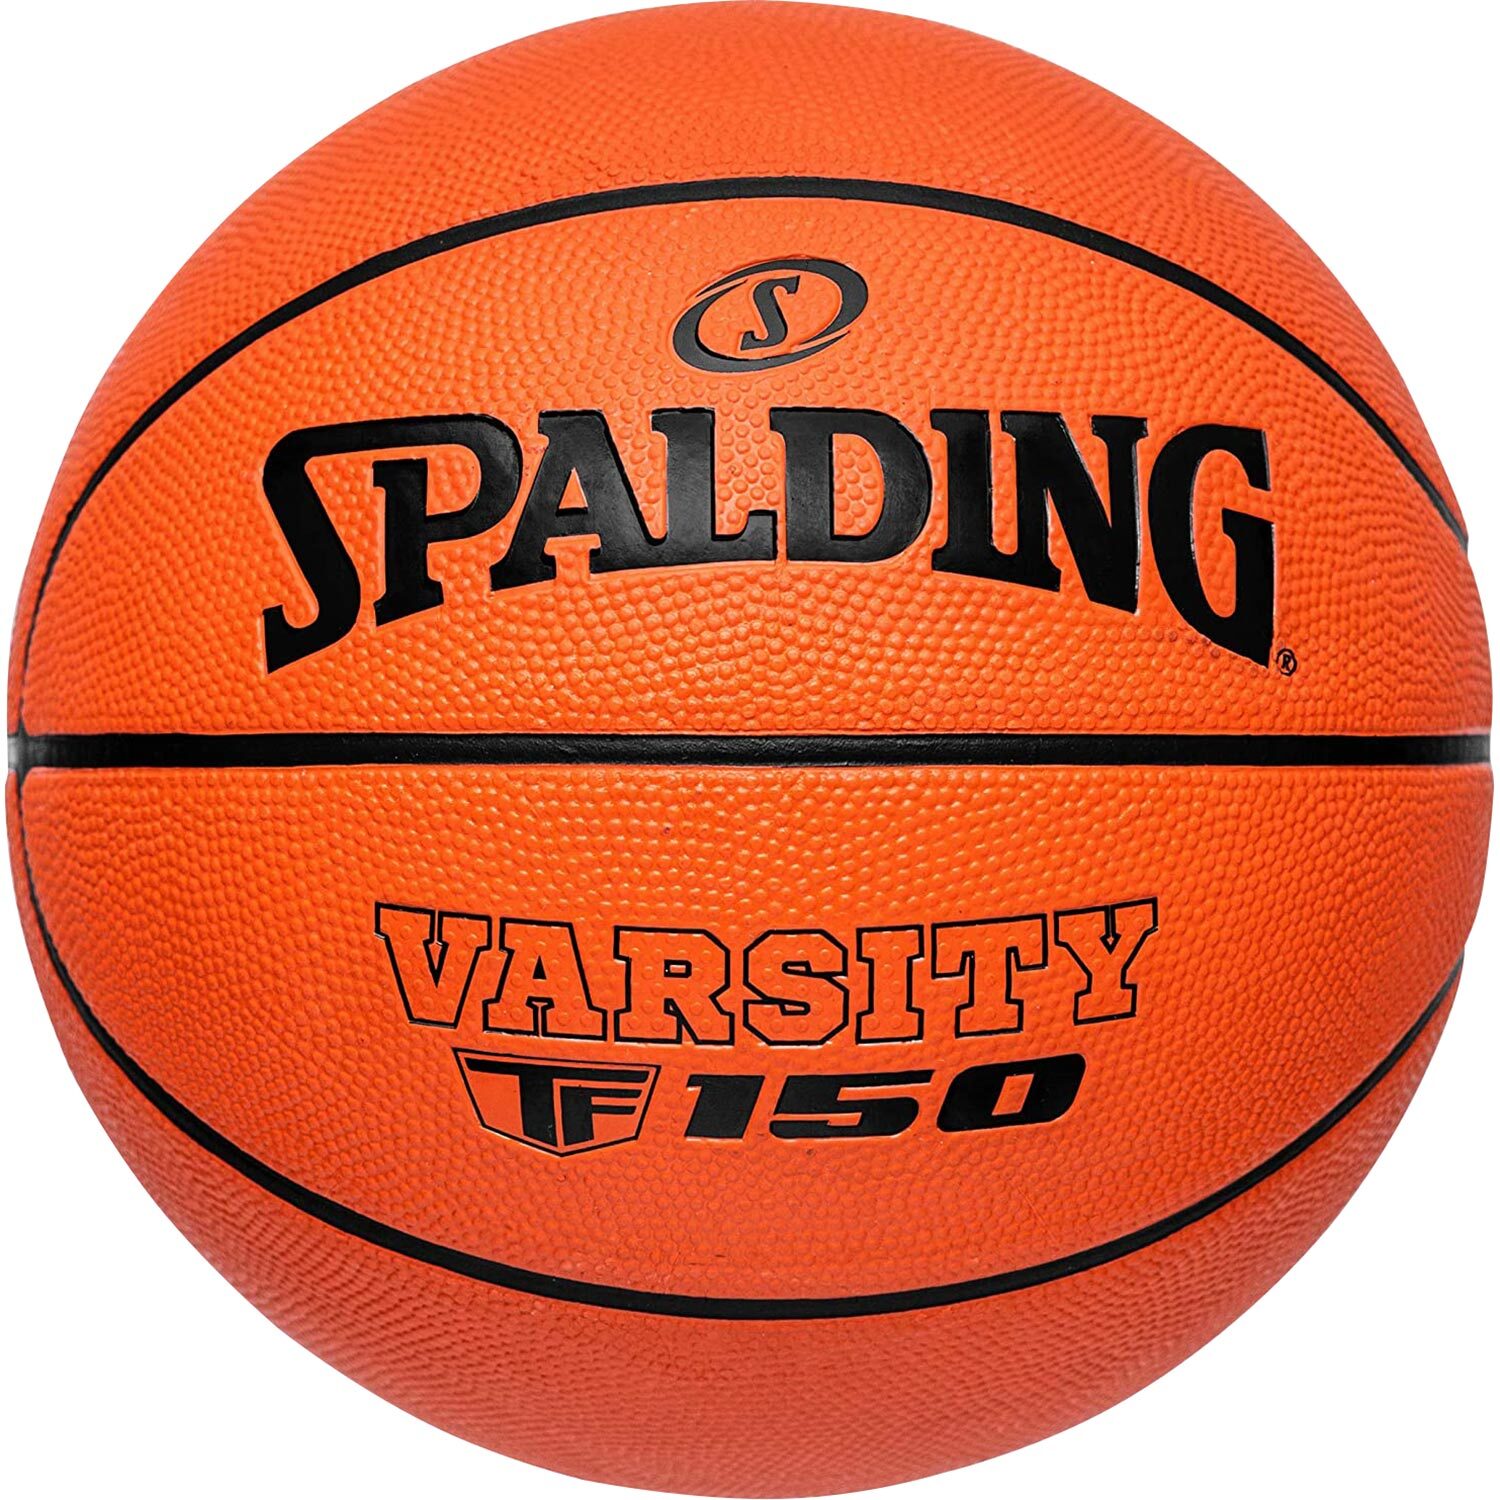 SPALDING Spalding Varsity TF150 basketbal maat 6 outdoor